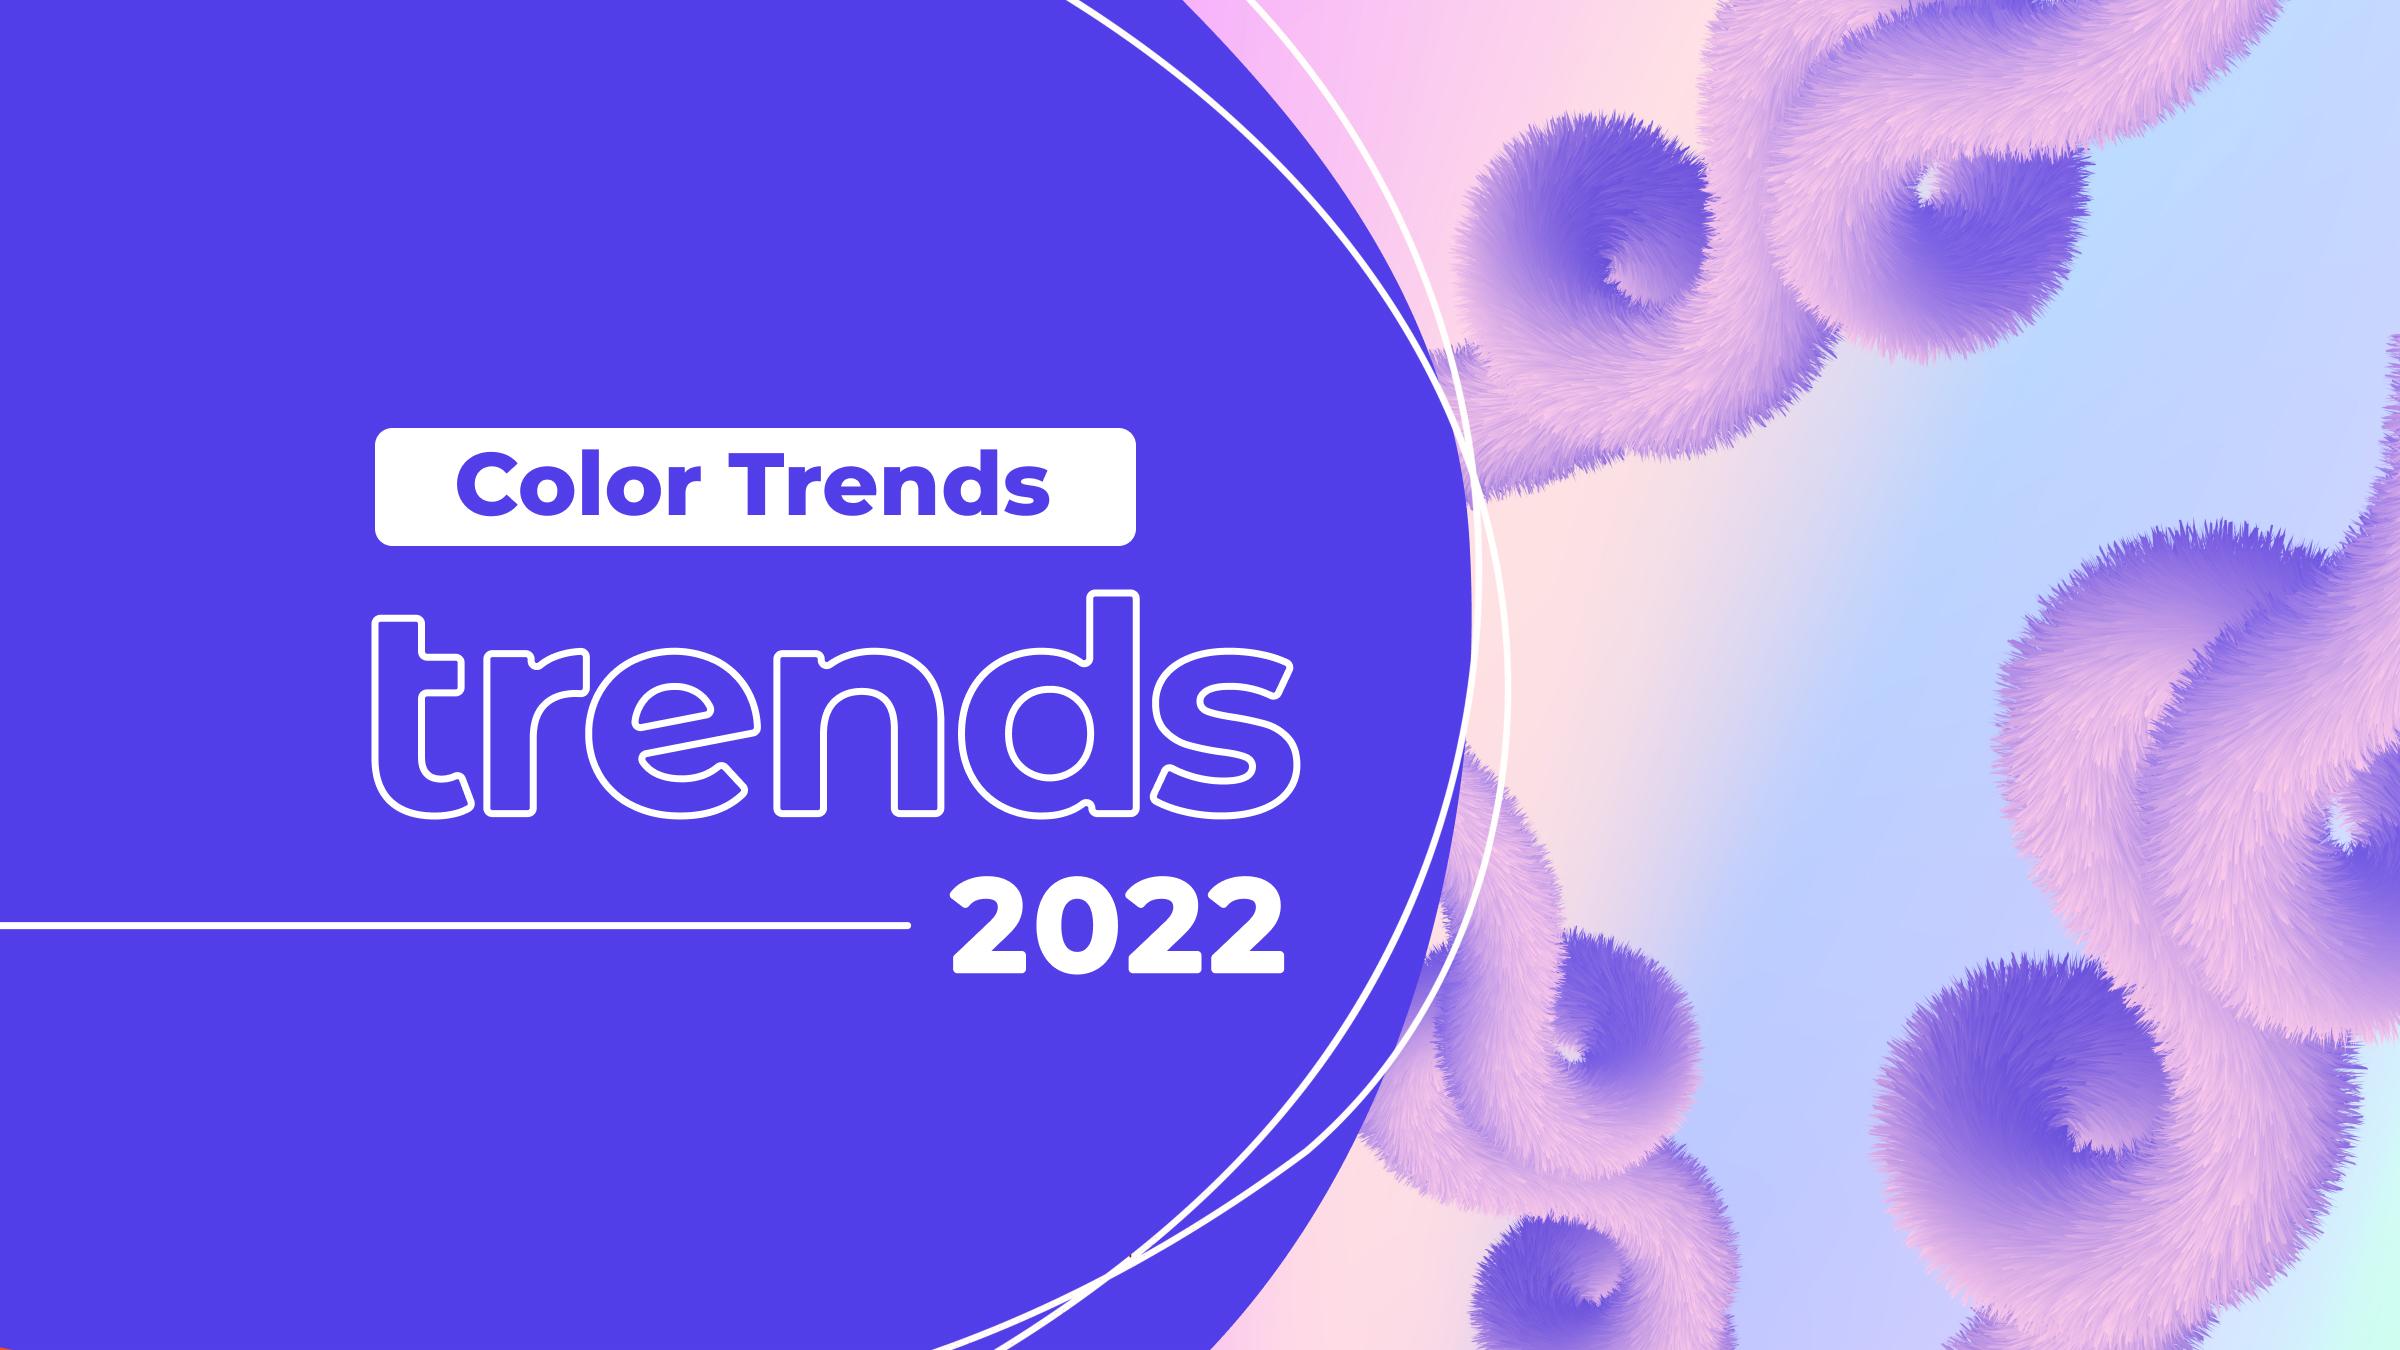 Fashion color trend autumn winter 2021 - 2022 Vector Image